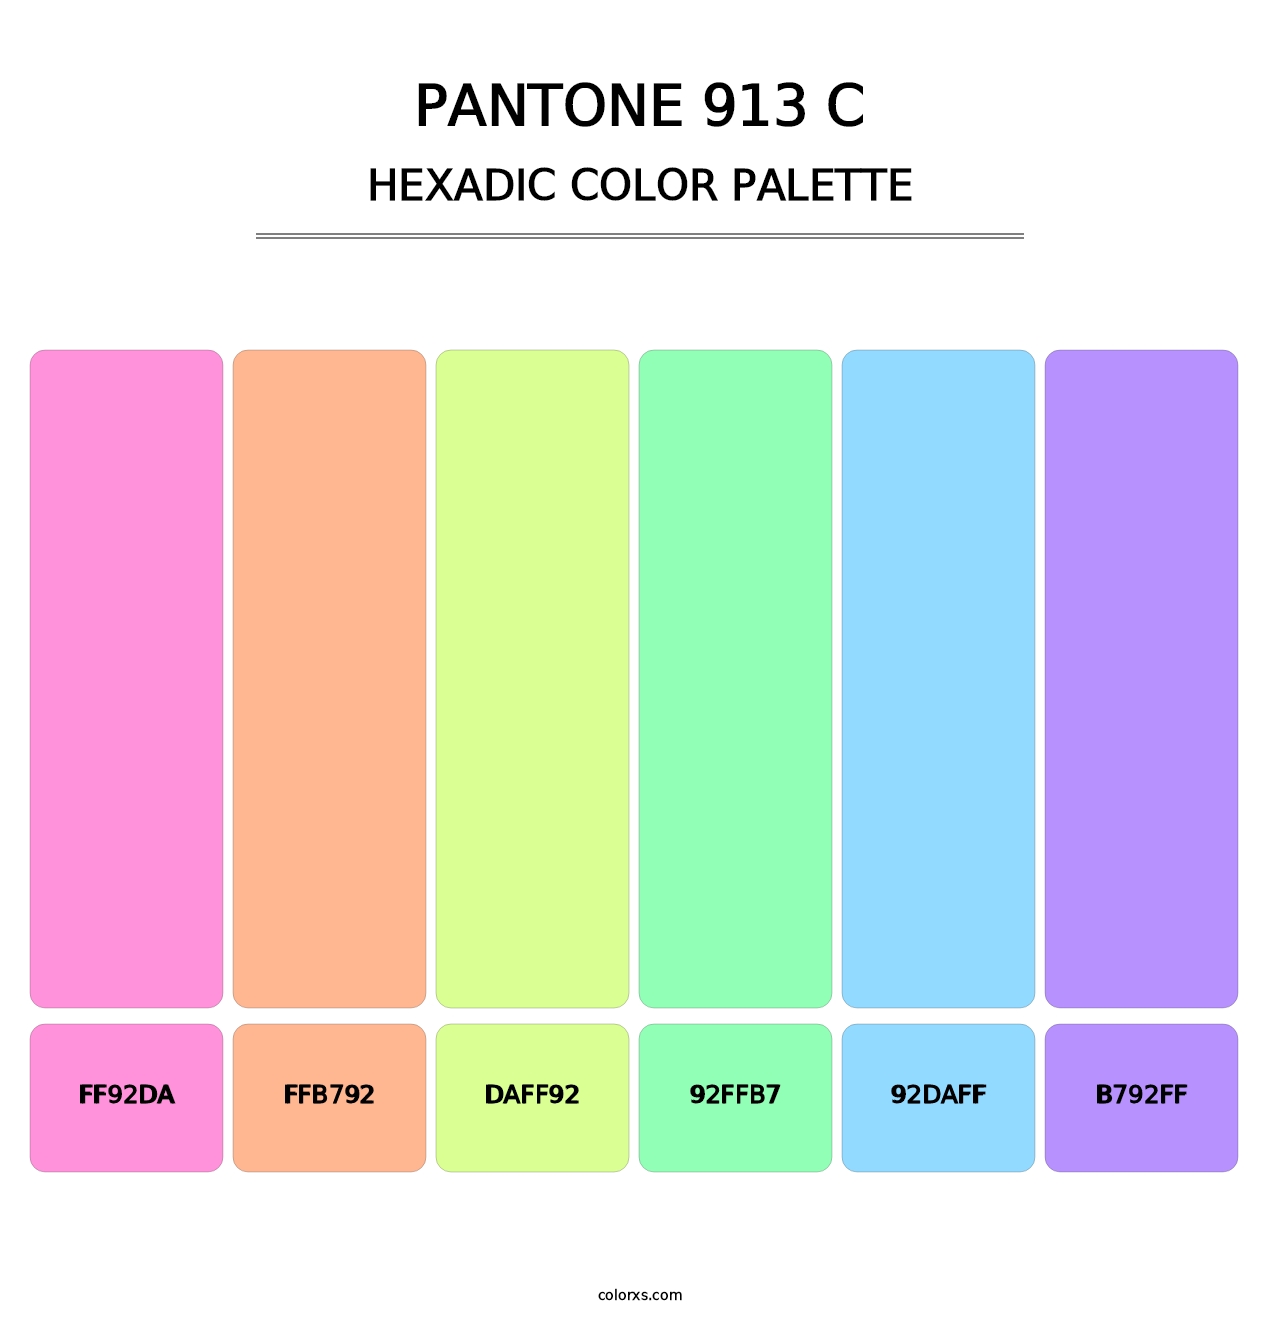 PANTONE 913 C - Hexadic Color Palette